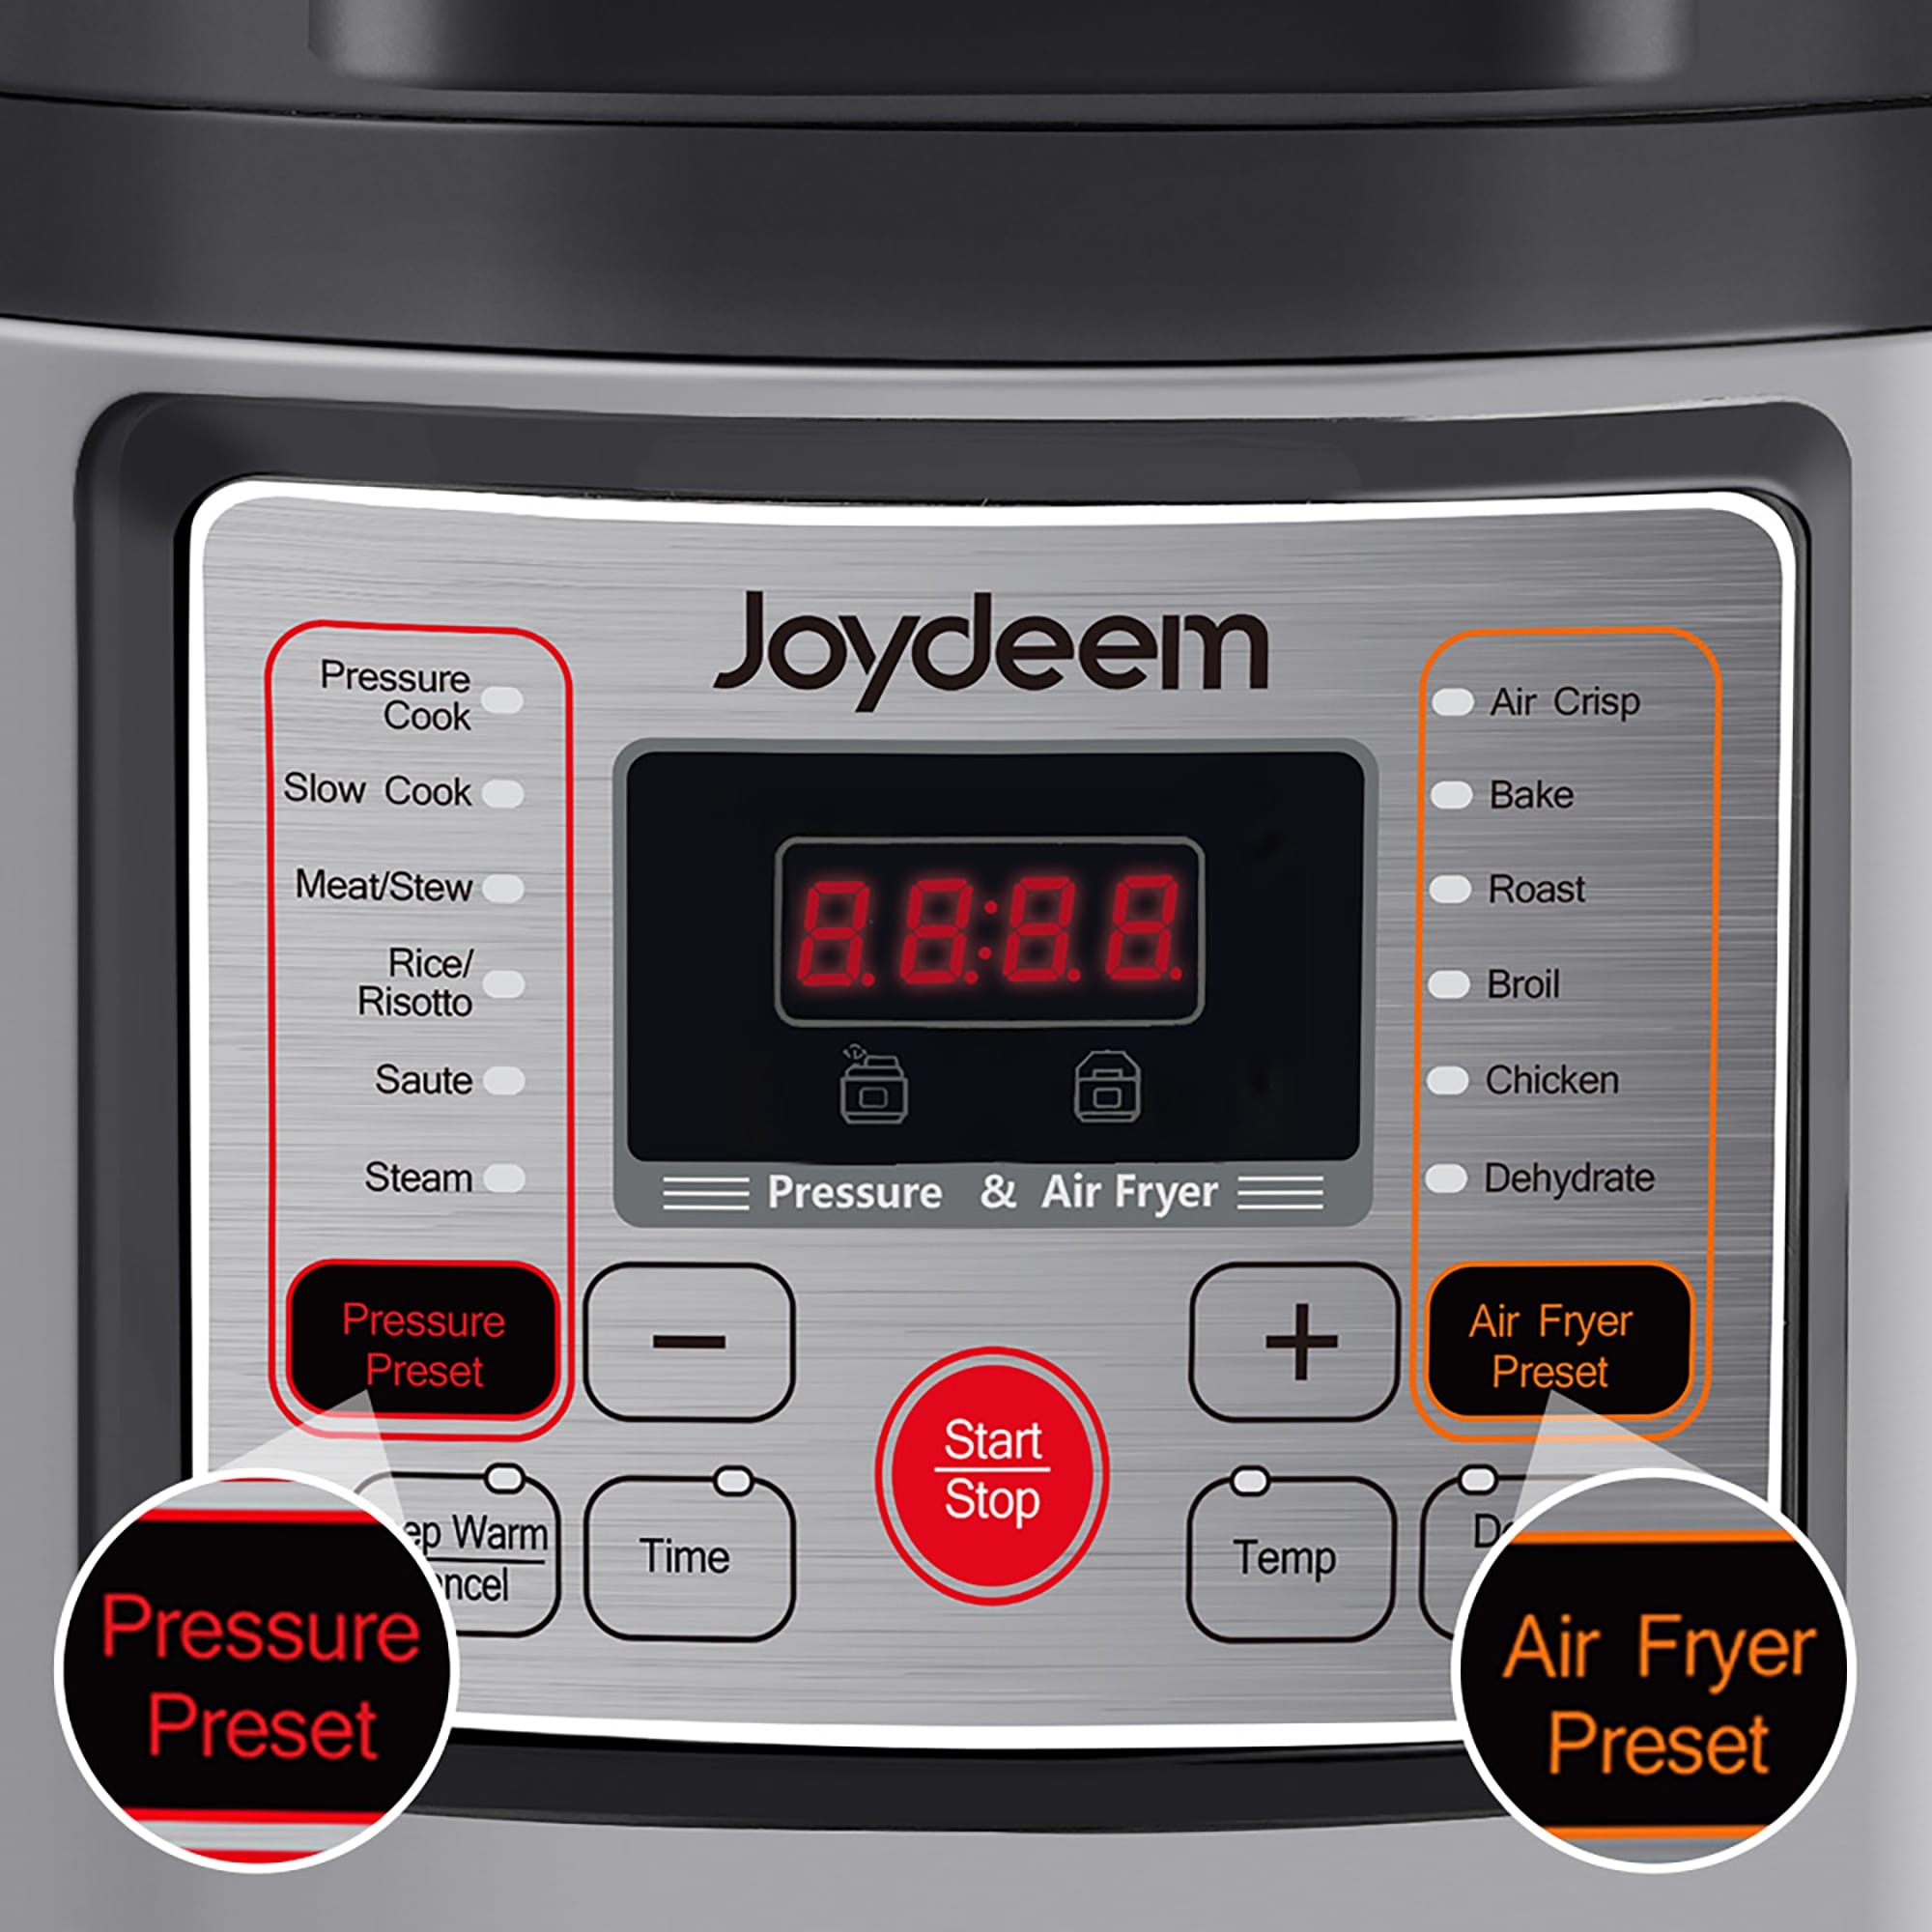 Joydeem 7Qt.12-in-1 Pressure Cooker and Air Fryer - Bed Bath & Beyond -  32940812